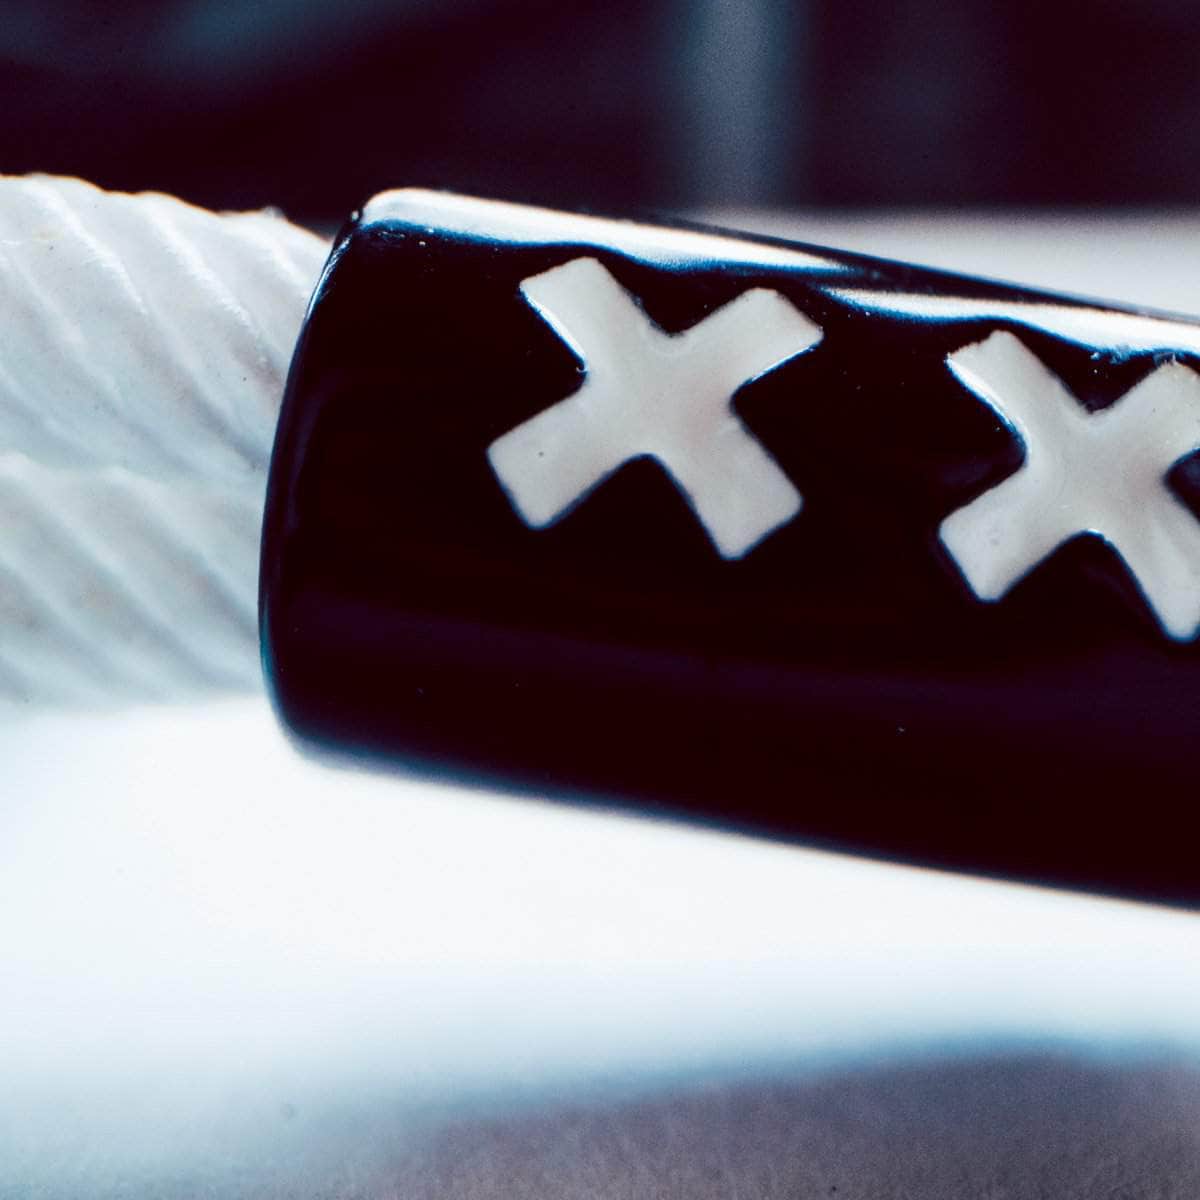 XX New School Bracelet (White/Black) - New School Bracelet -  Electric Family-  Electric Family Official Artist Merchandise